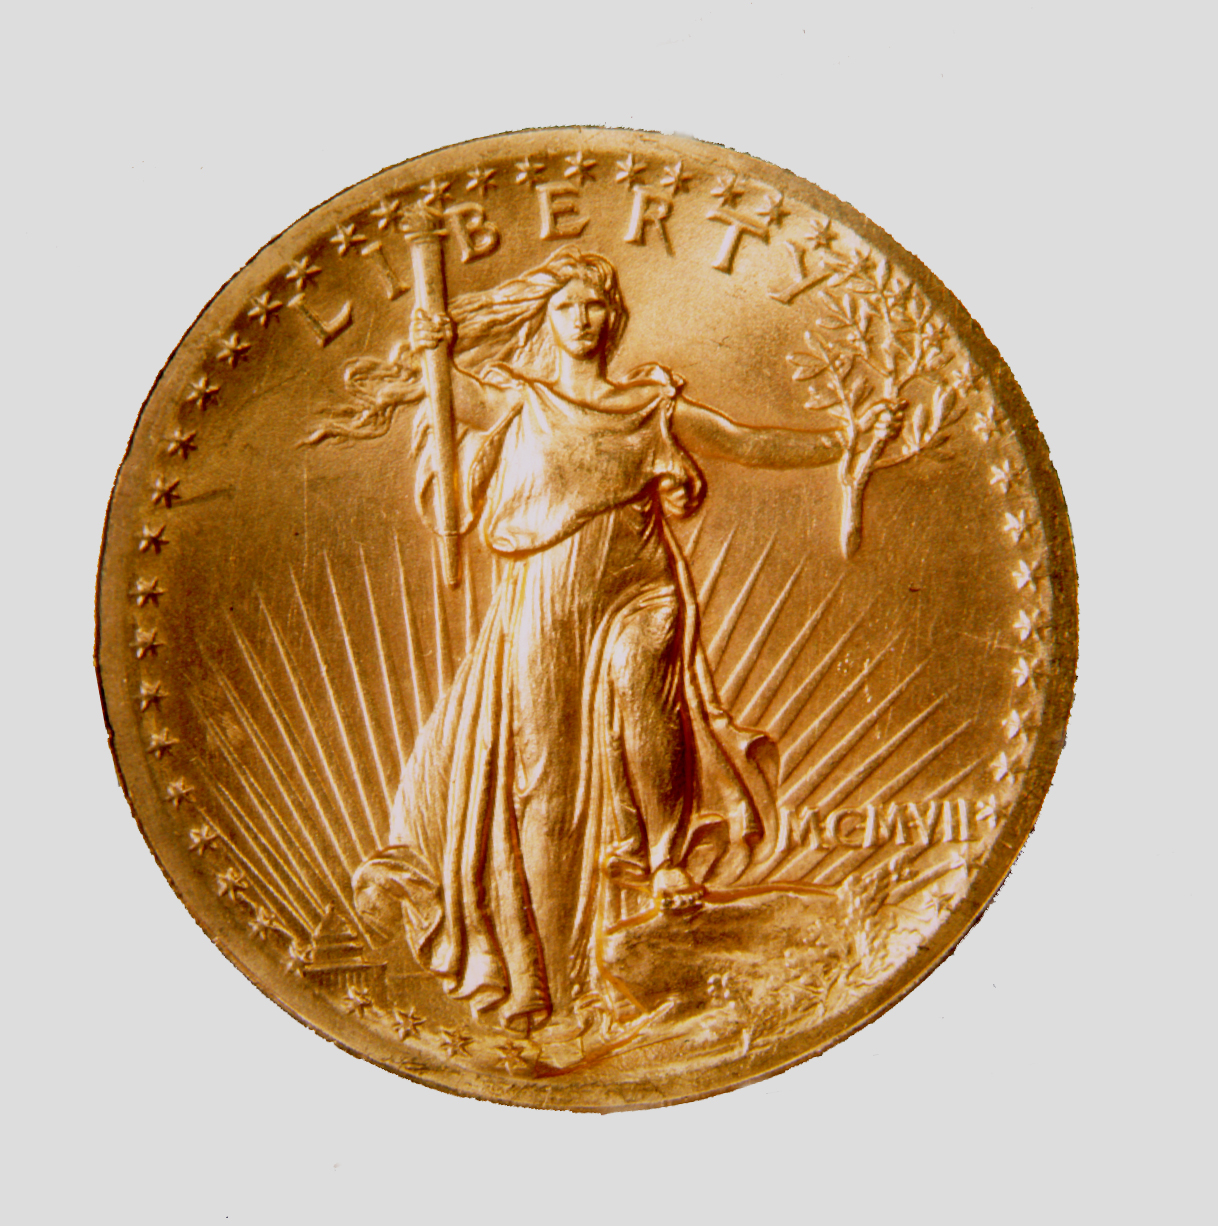 Obverse of the twenty dollar gold coin, 1907